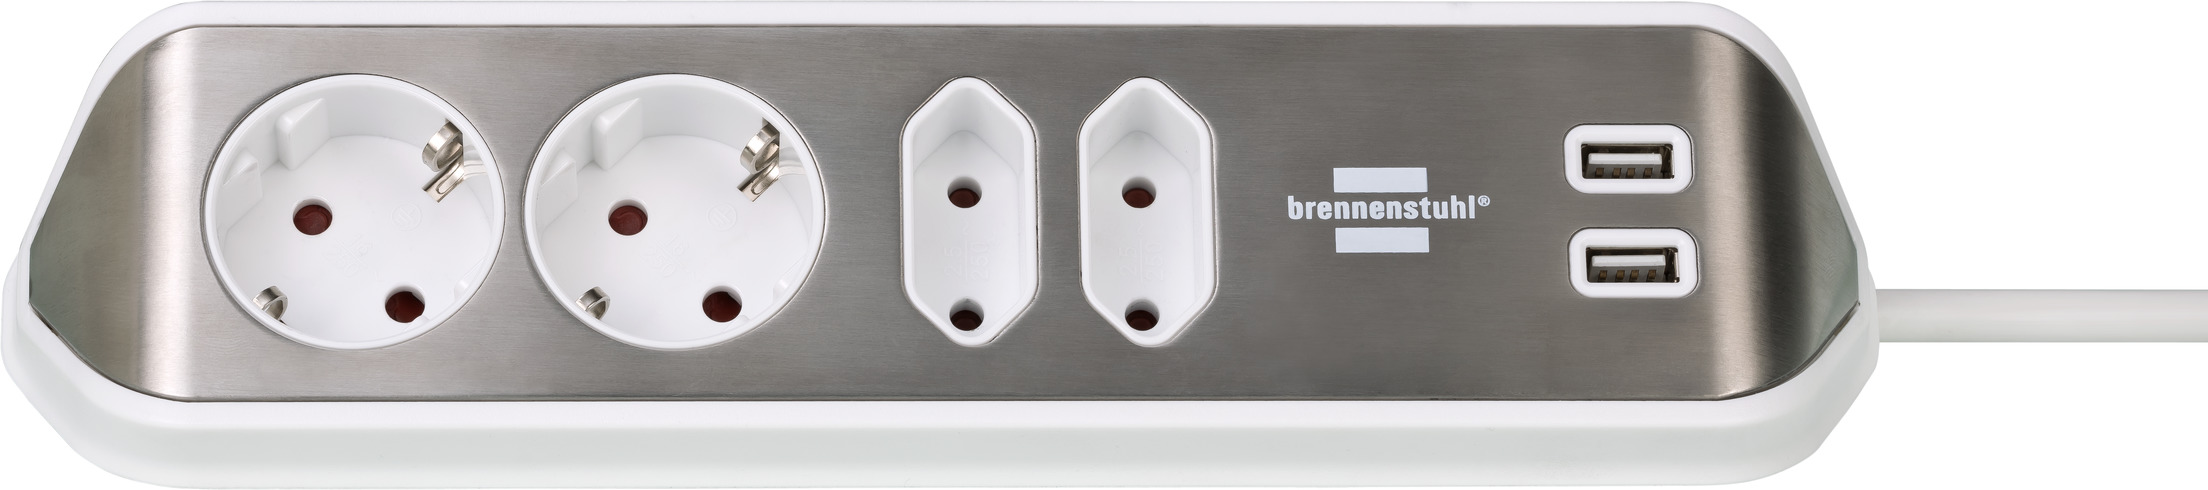 Regleta de enchufes para exteriores professionalLINE IP54 – Brennenstuhl: 4  enchufes, con interruptor